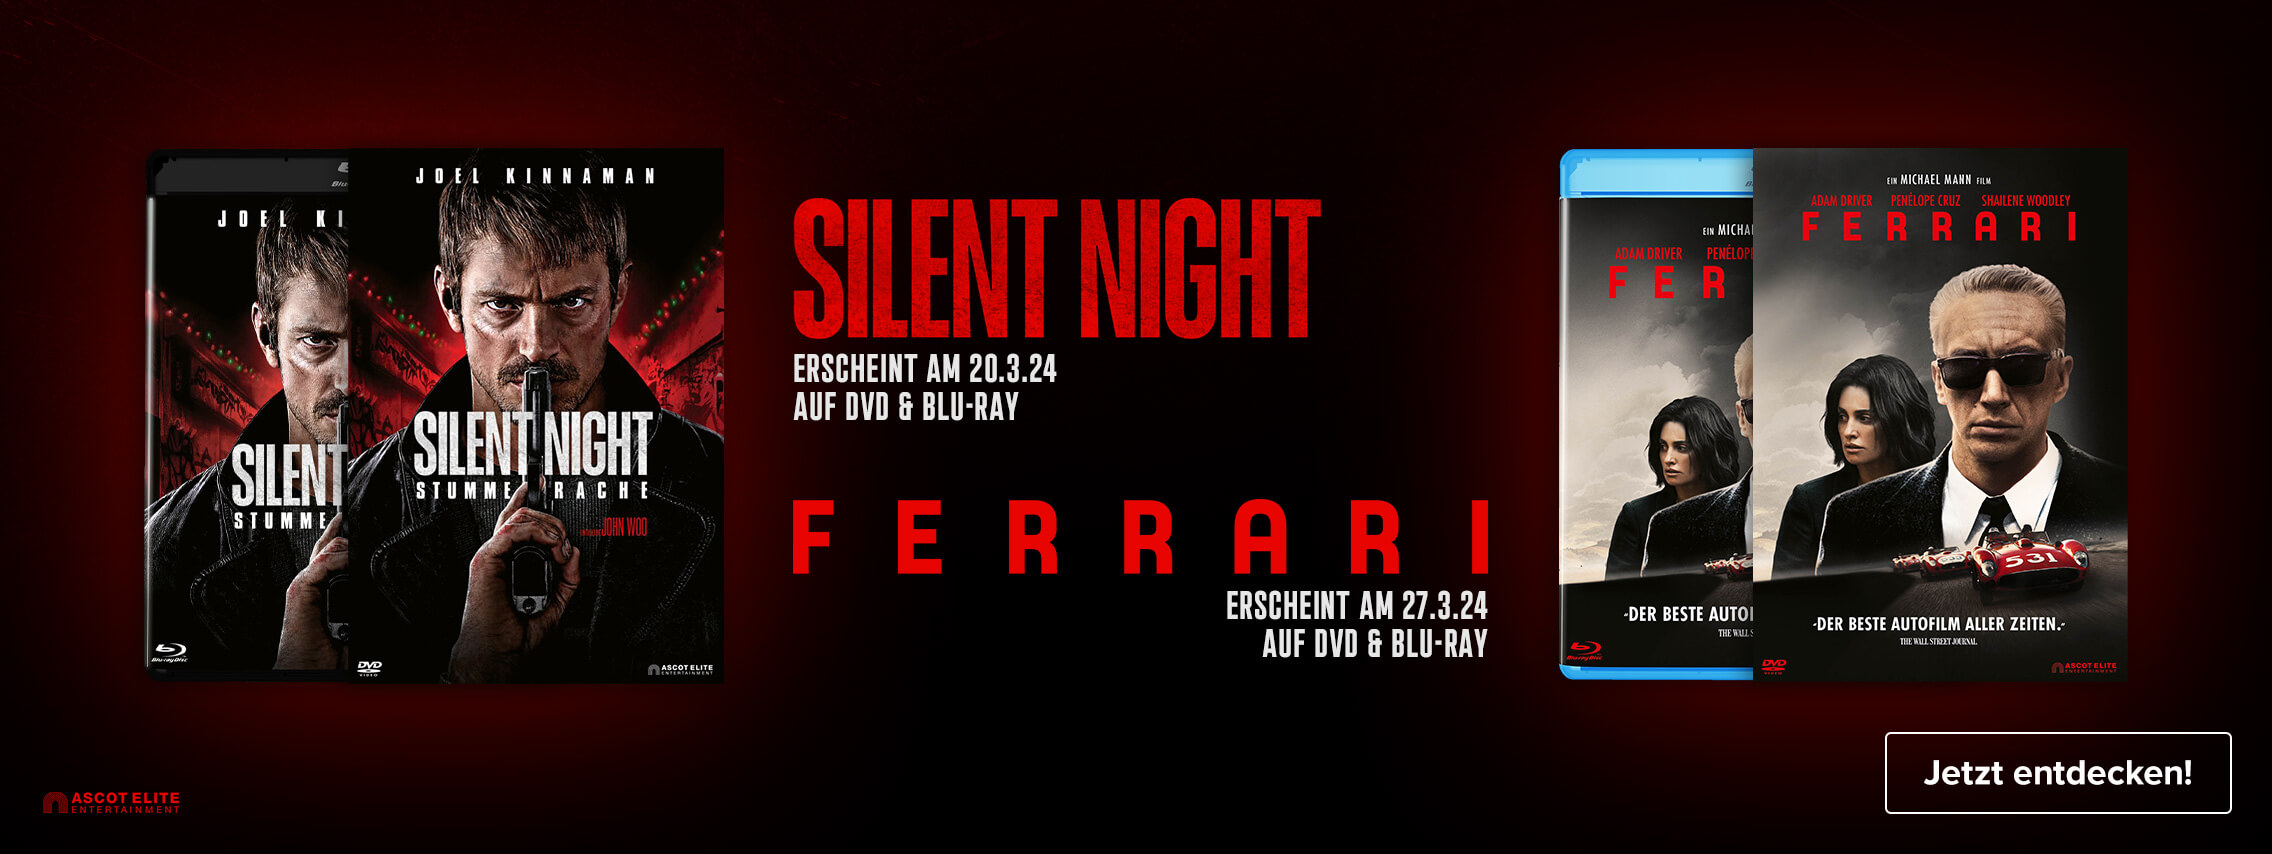 Silent Night / Ferrari